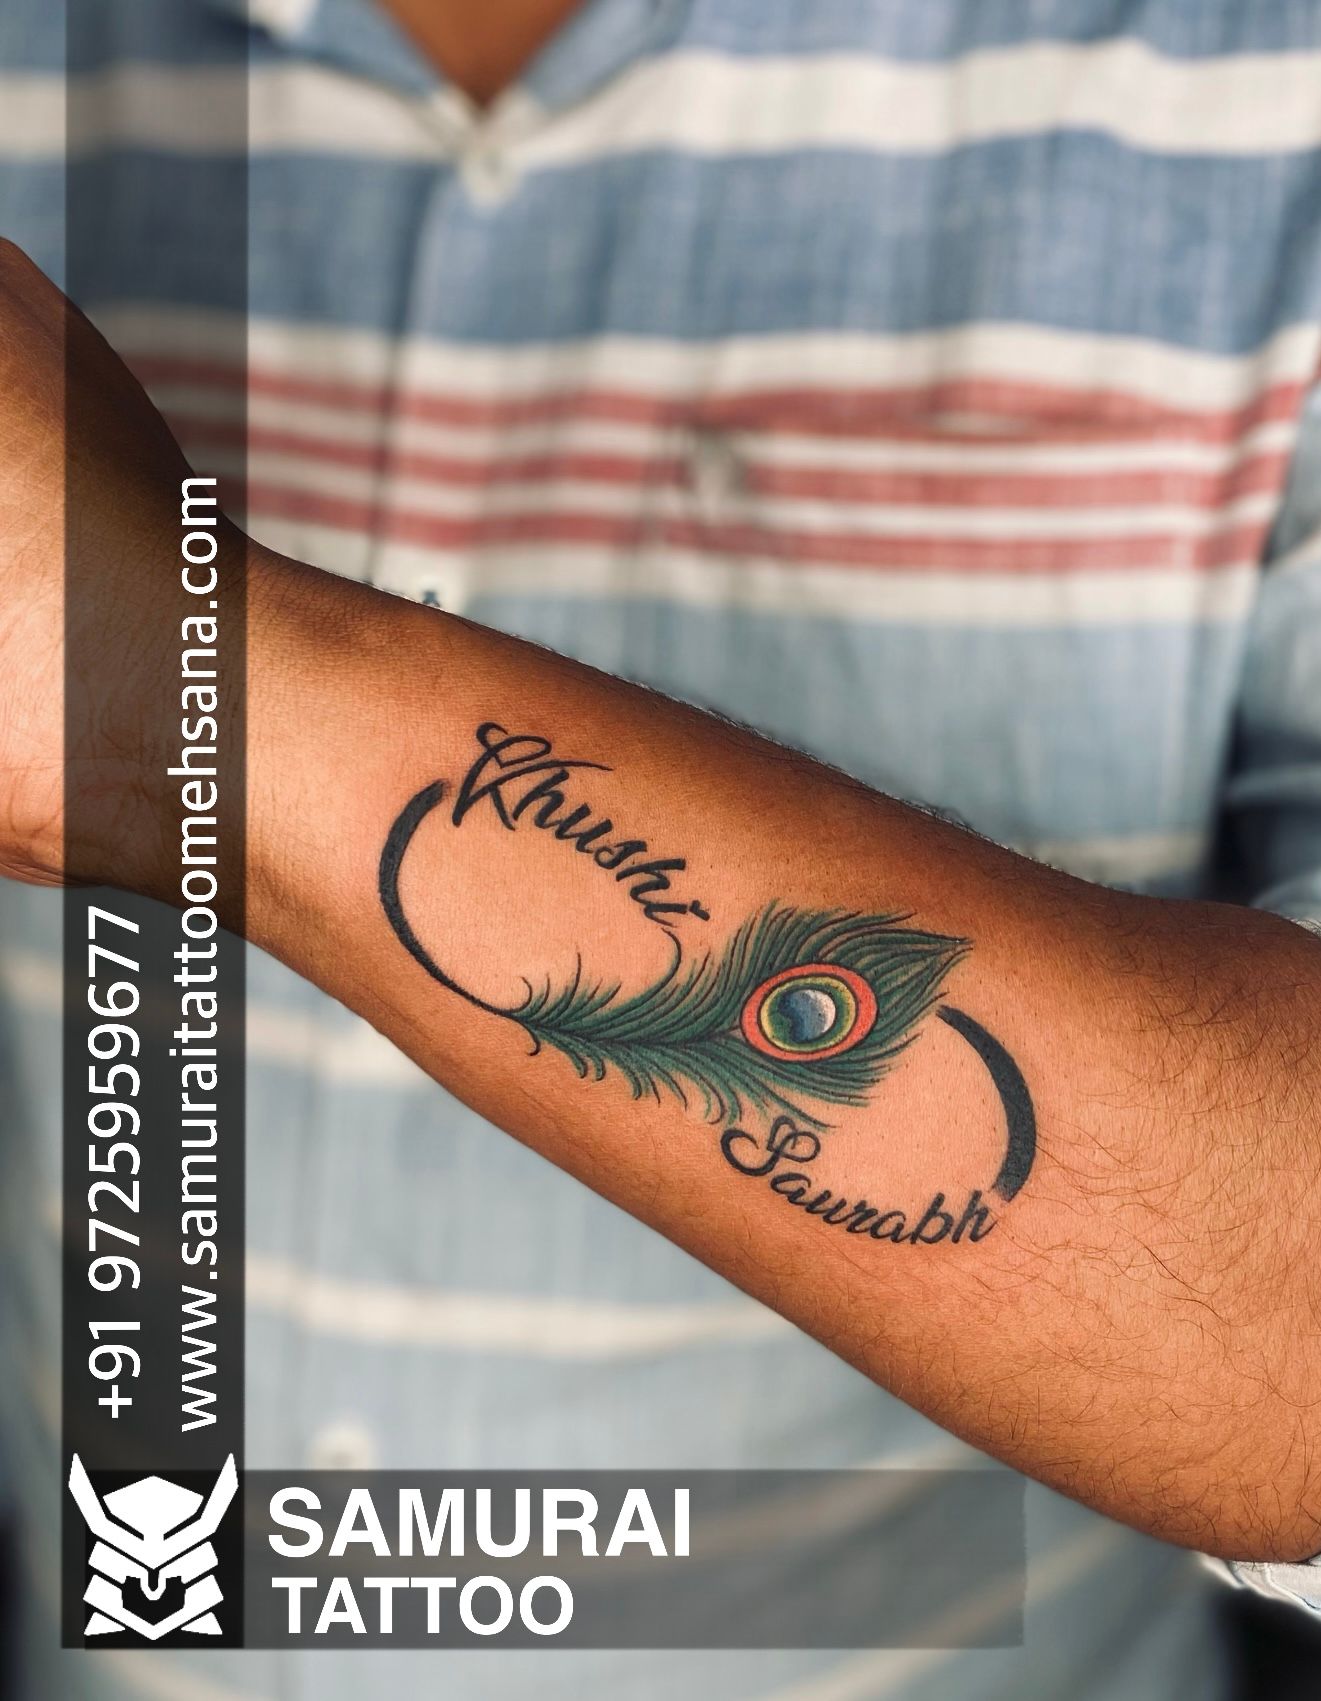 Tusharsinghs Tattoo Studio on Instagram  Contact No 8866242073  Artist tusharsinghtattoos Khushi name tattoo wi  Name tattoo Tattoos  Small heart